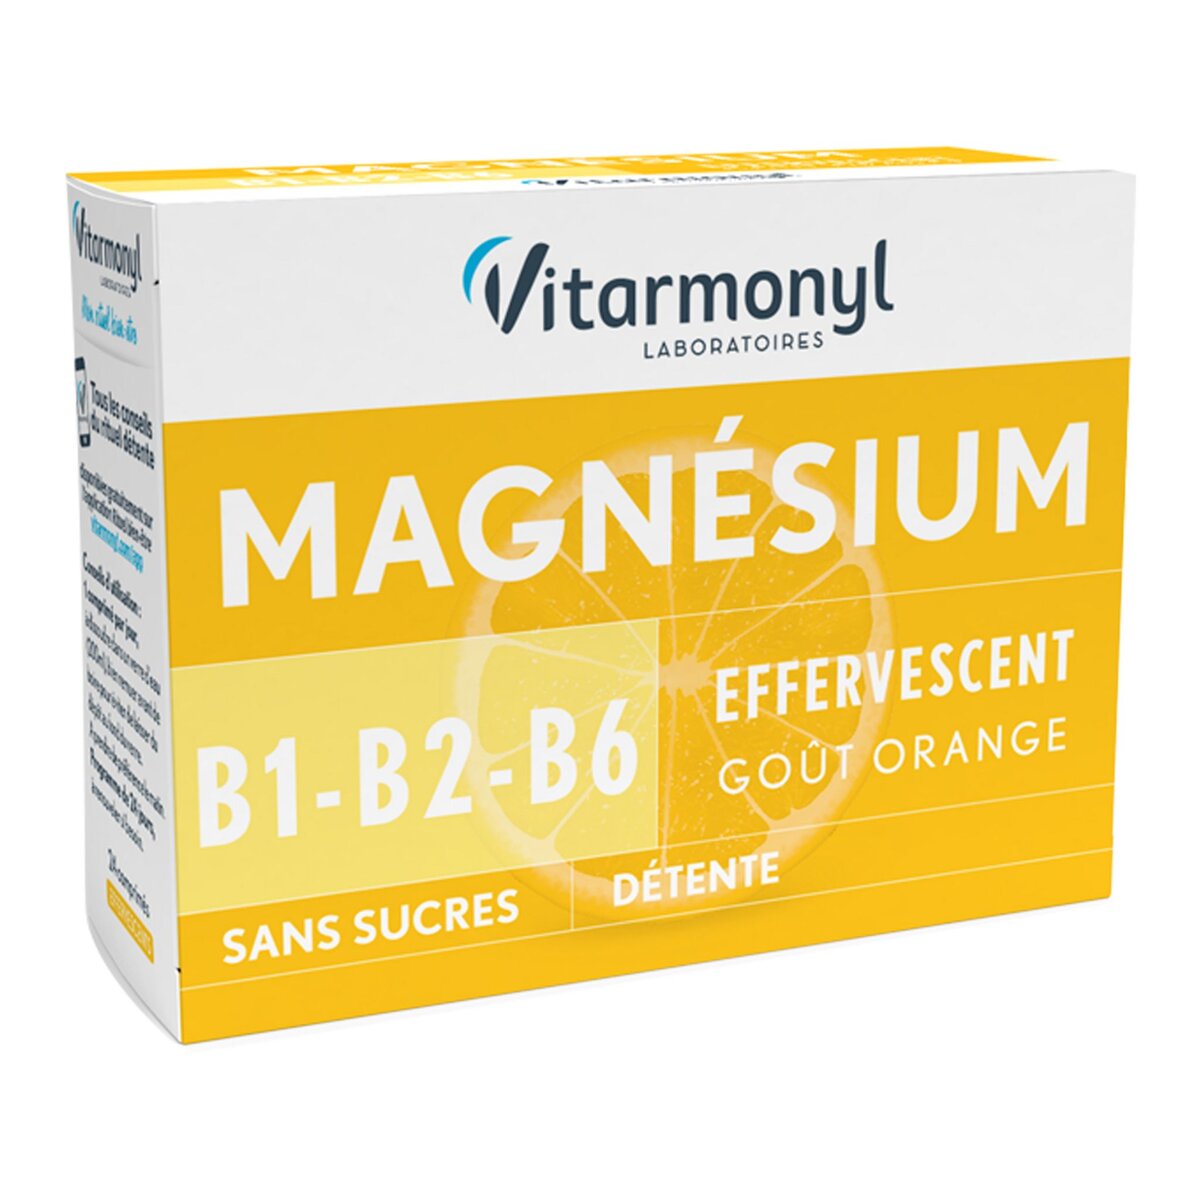 VITARMONYL Comprimés effervescents magnésium goût orange sans sucre 67g